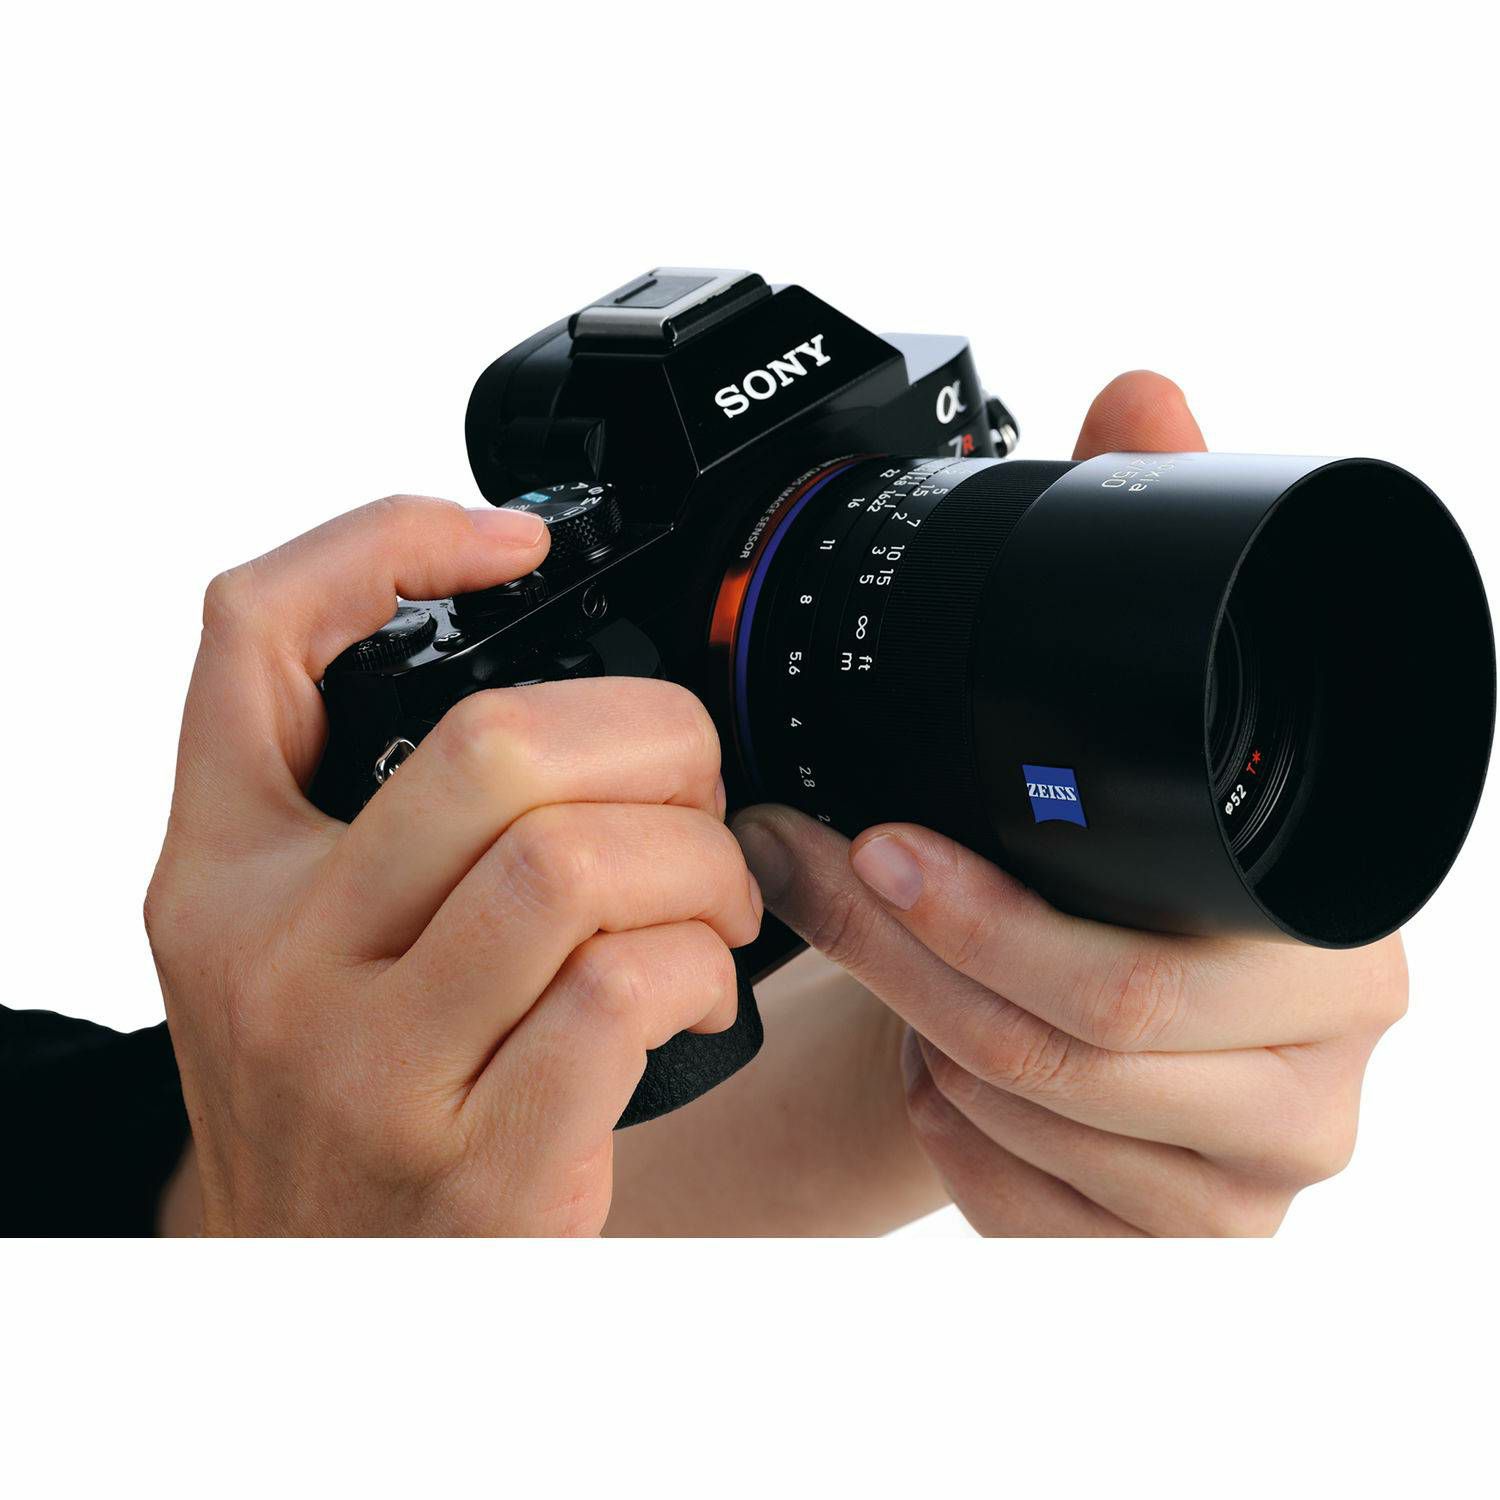 Zeiss Loxia 50mm f/2 FE objektiv za Sony E-mount (2103-748)